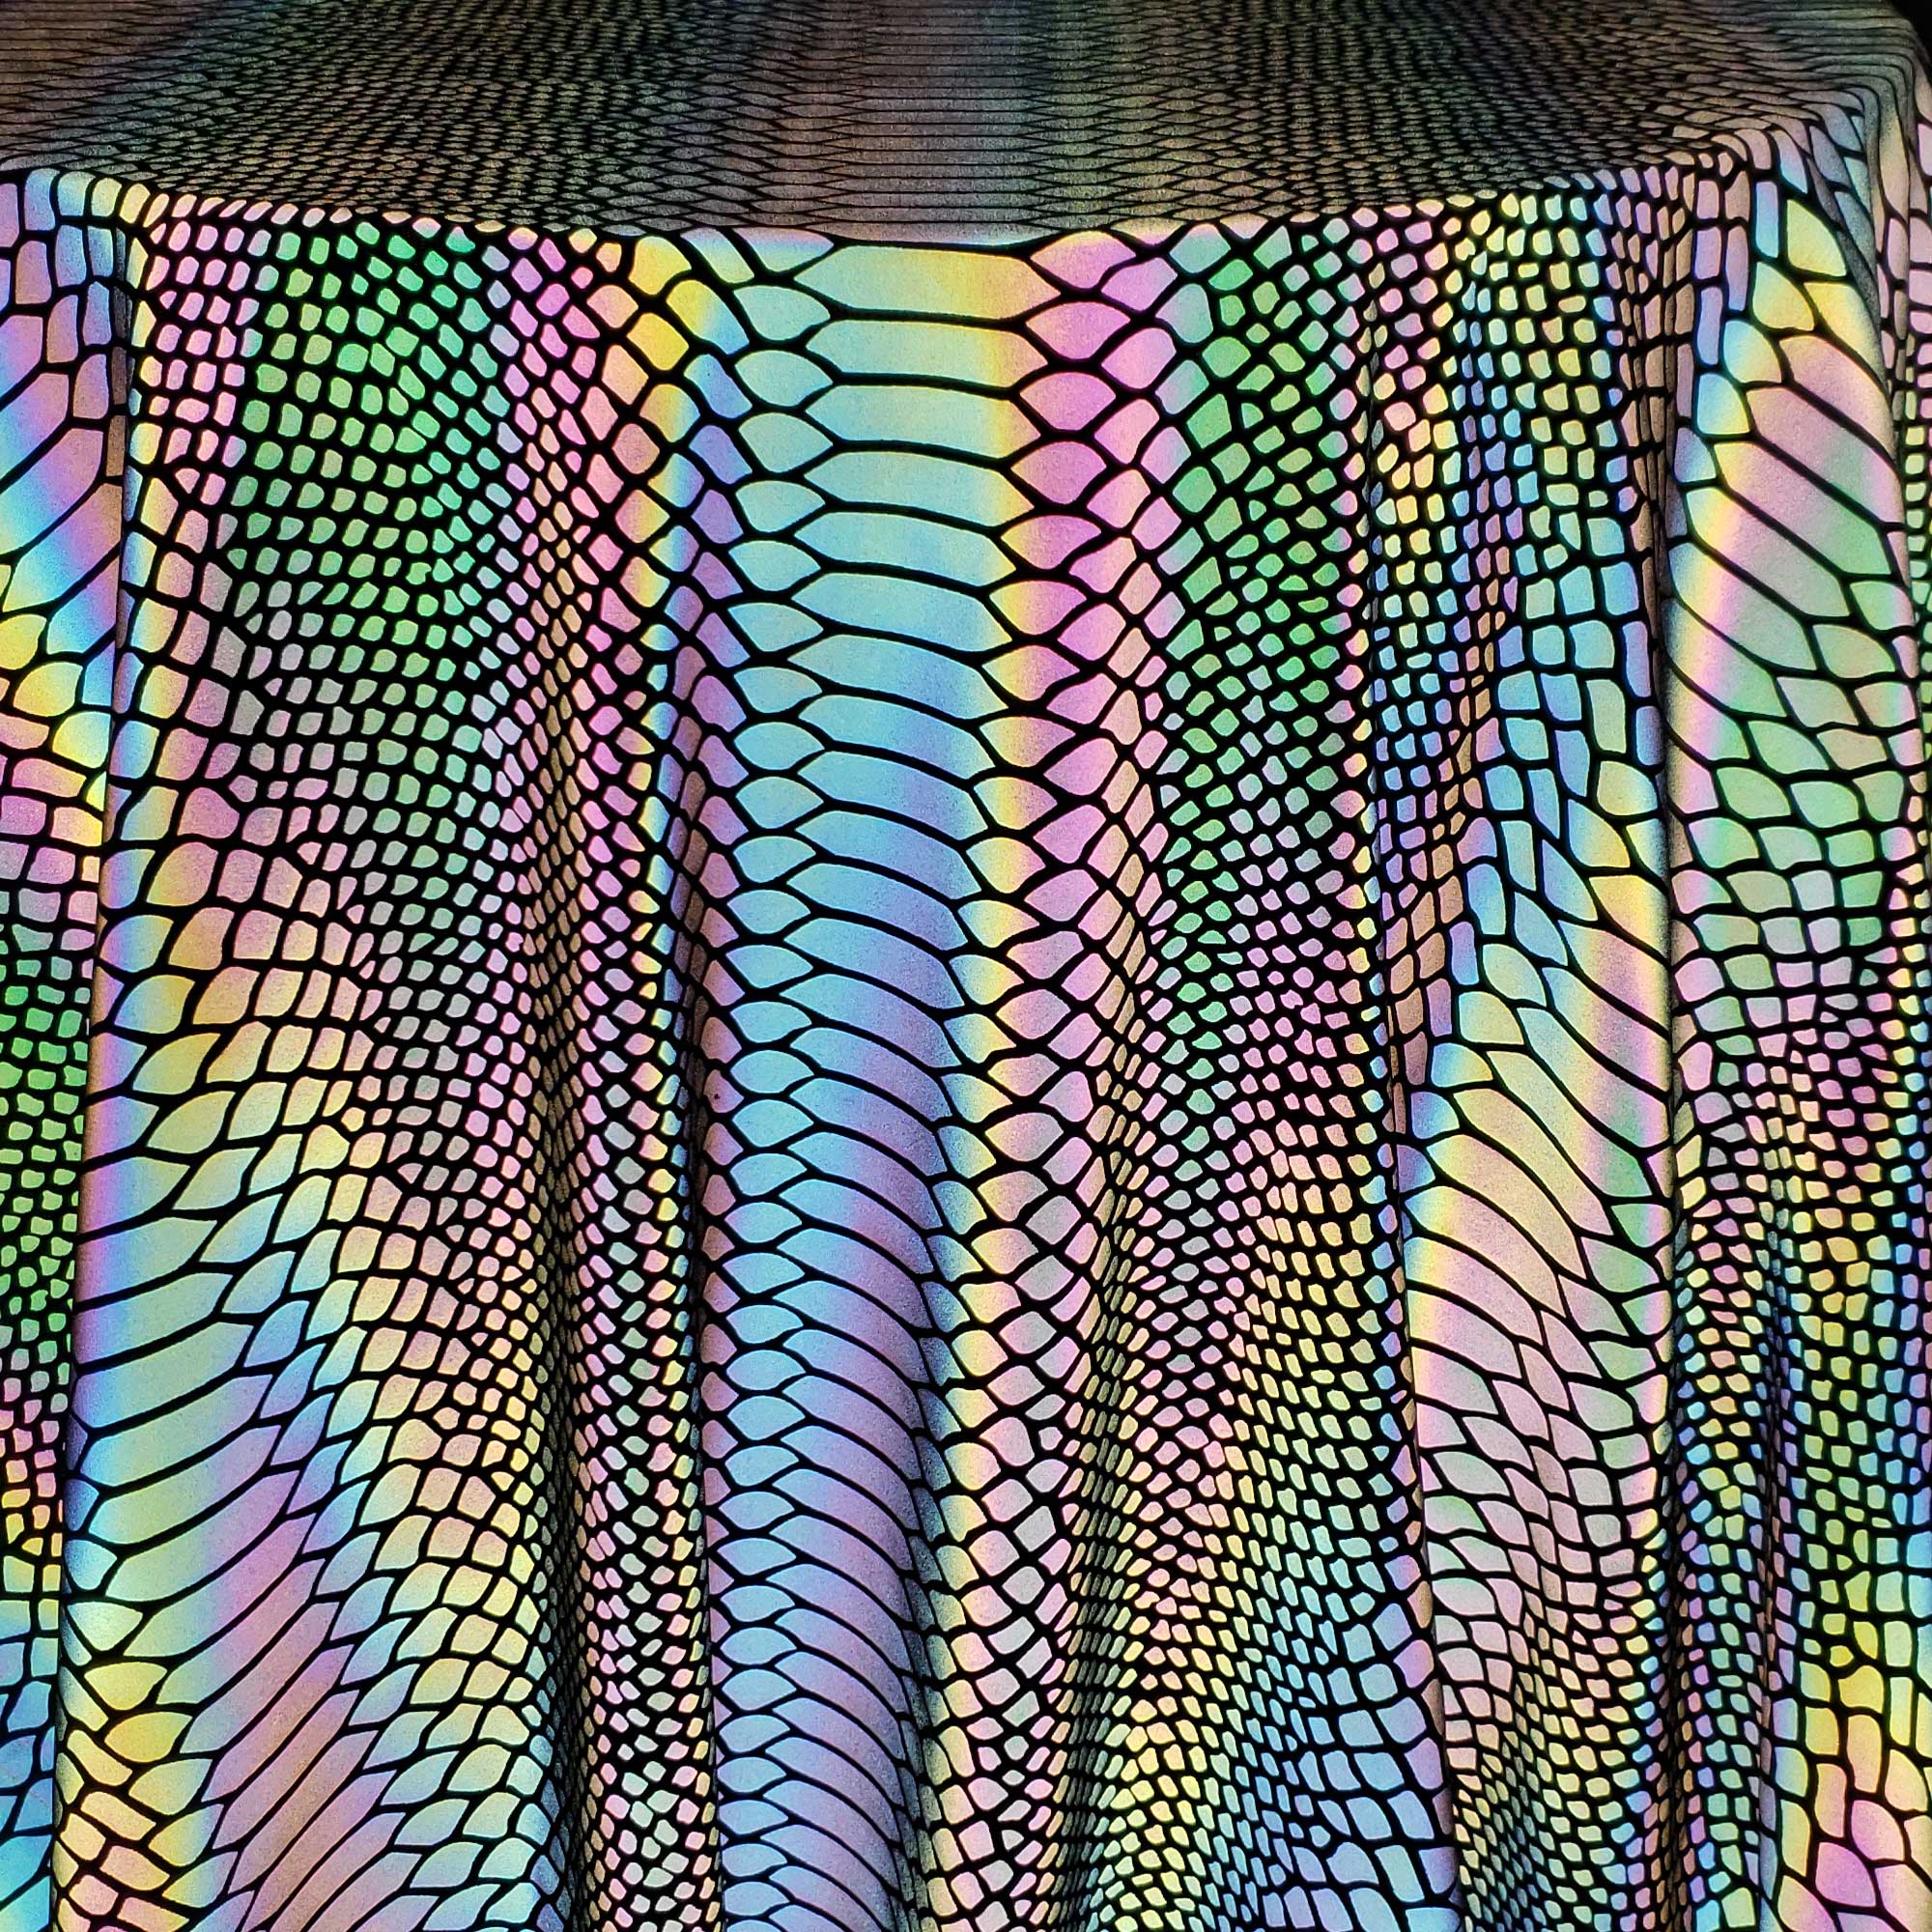 rainbow reflective fabric, reflective fabric supplier